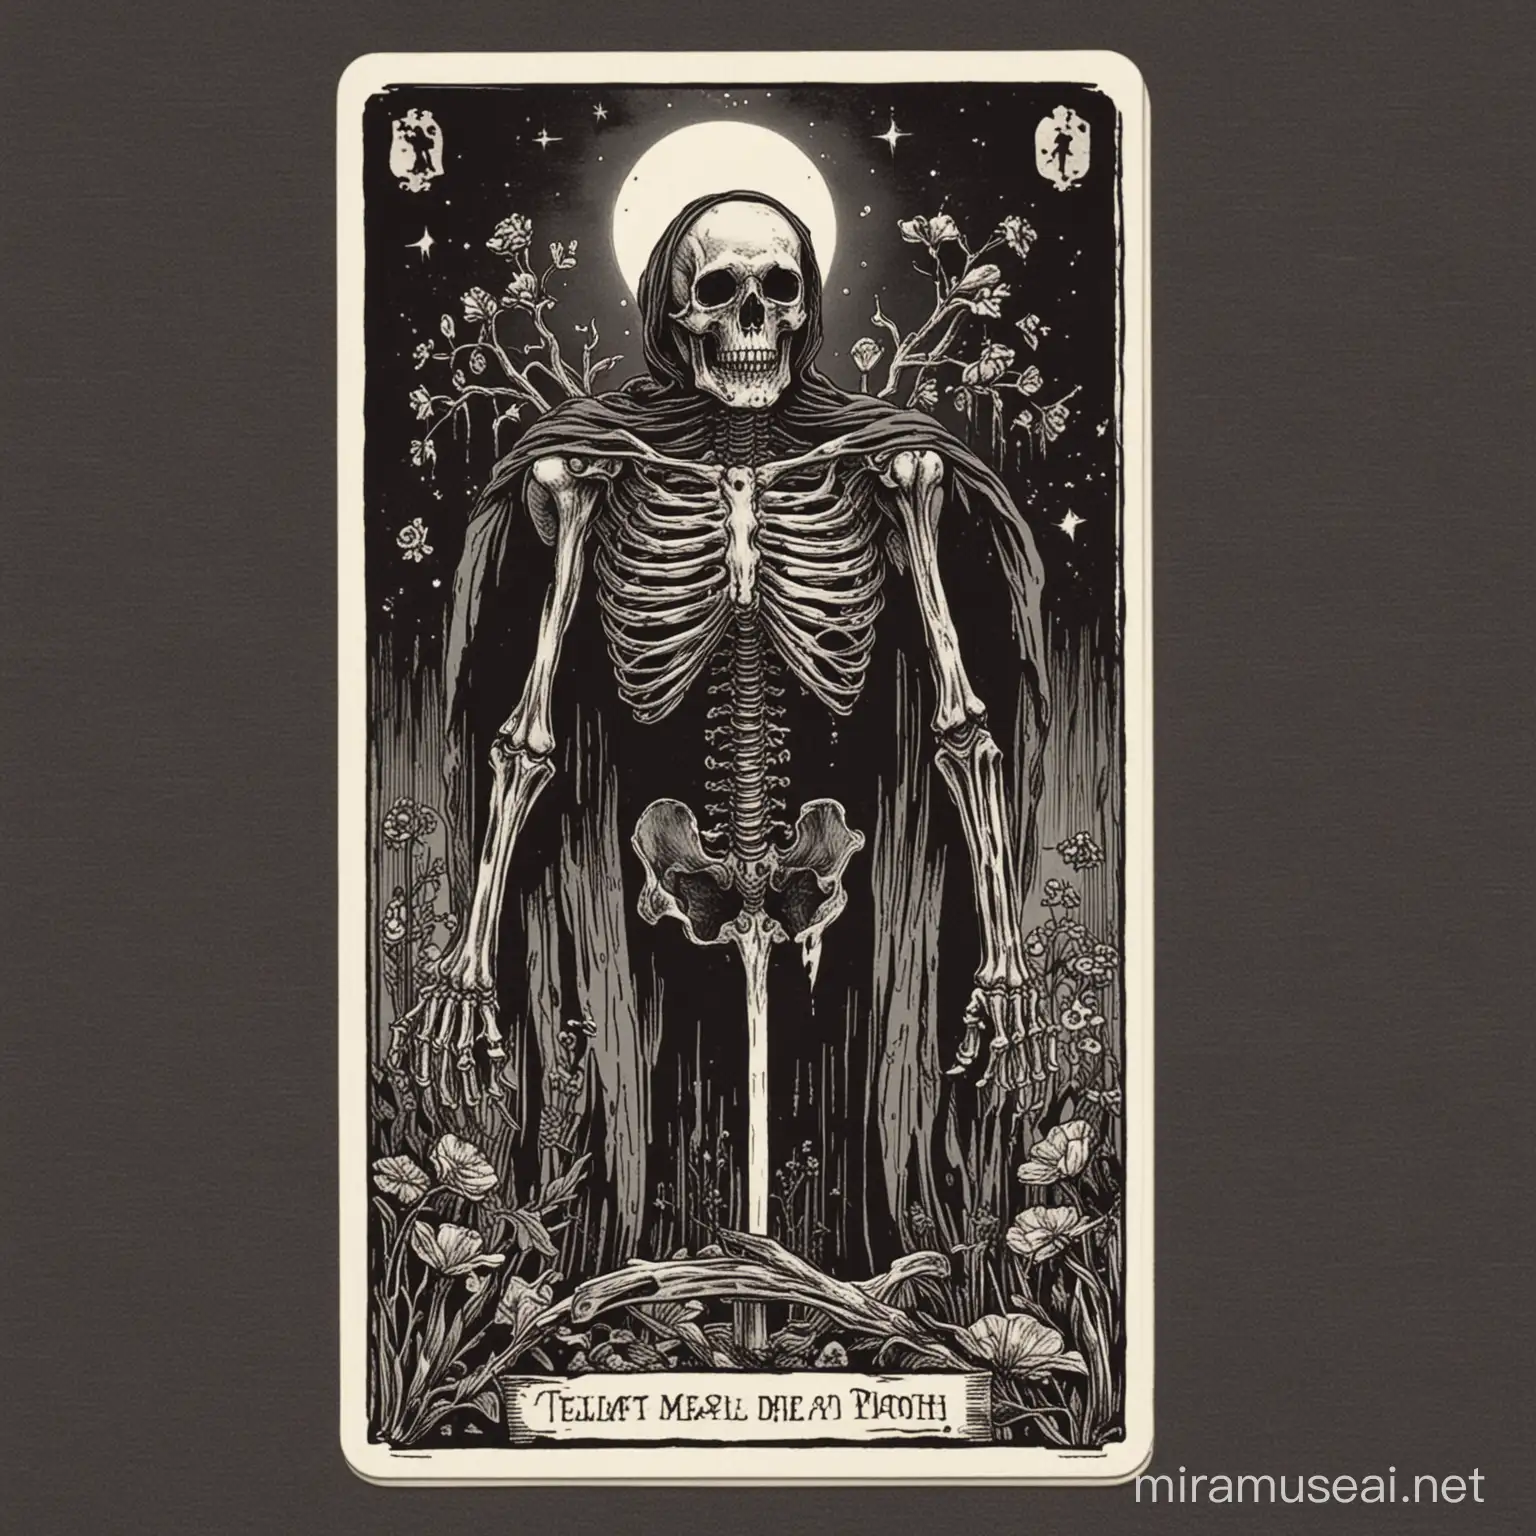 Tell me death card tarot 